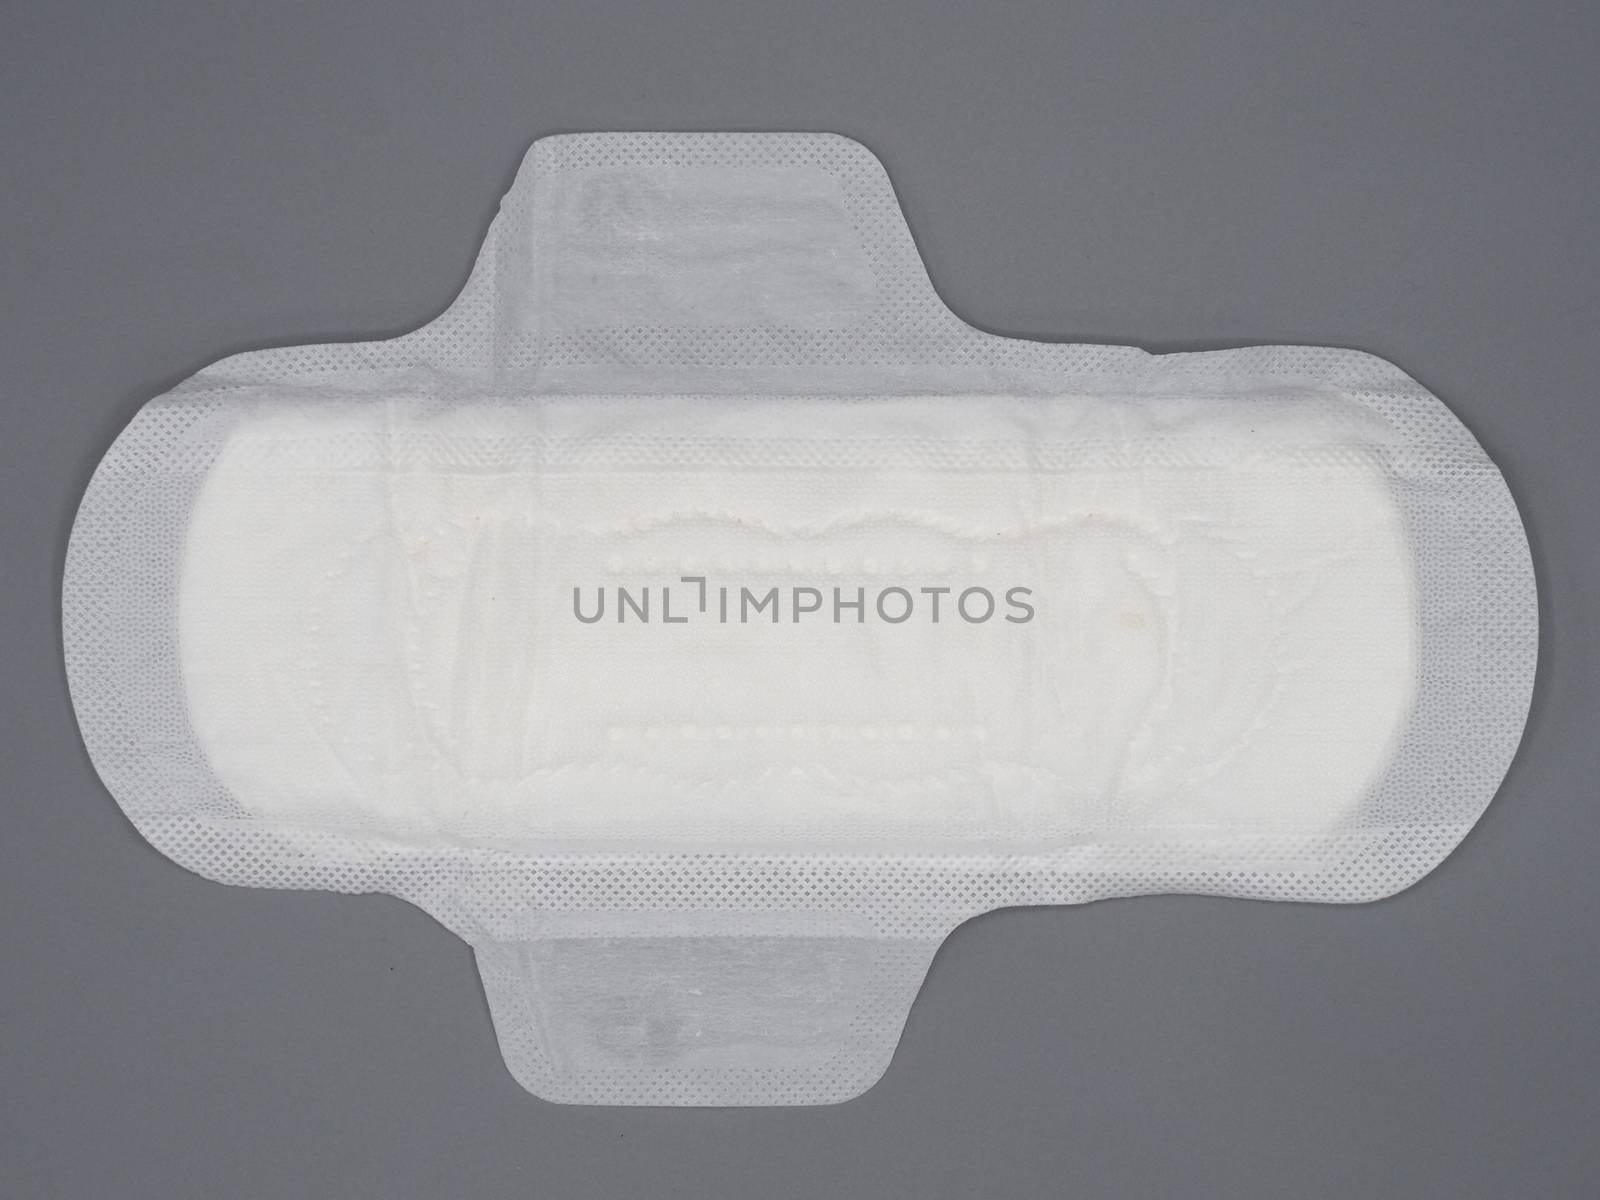 Hygenic organic cotton soft and comfort sanitary napkin pad by gnepphoto